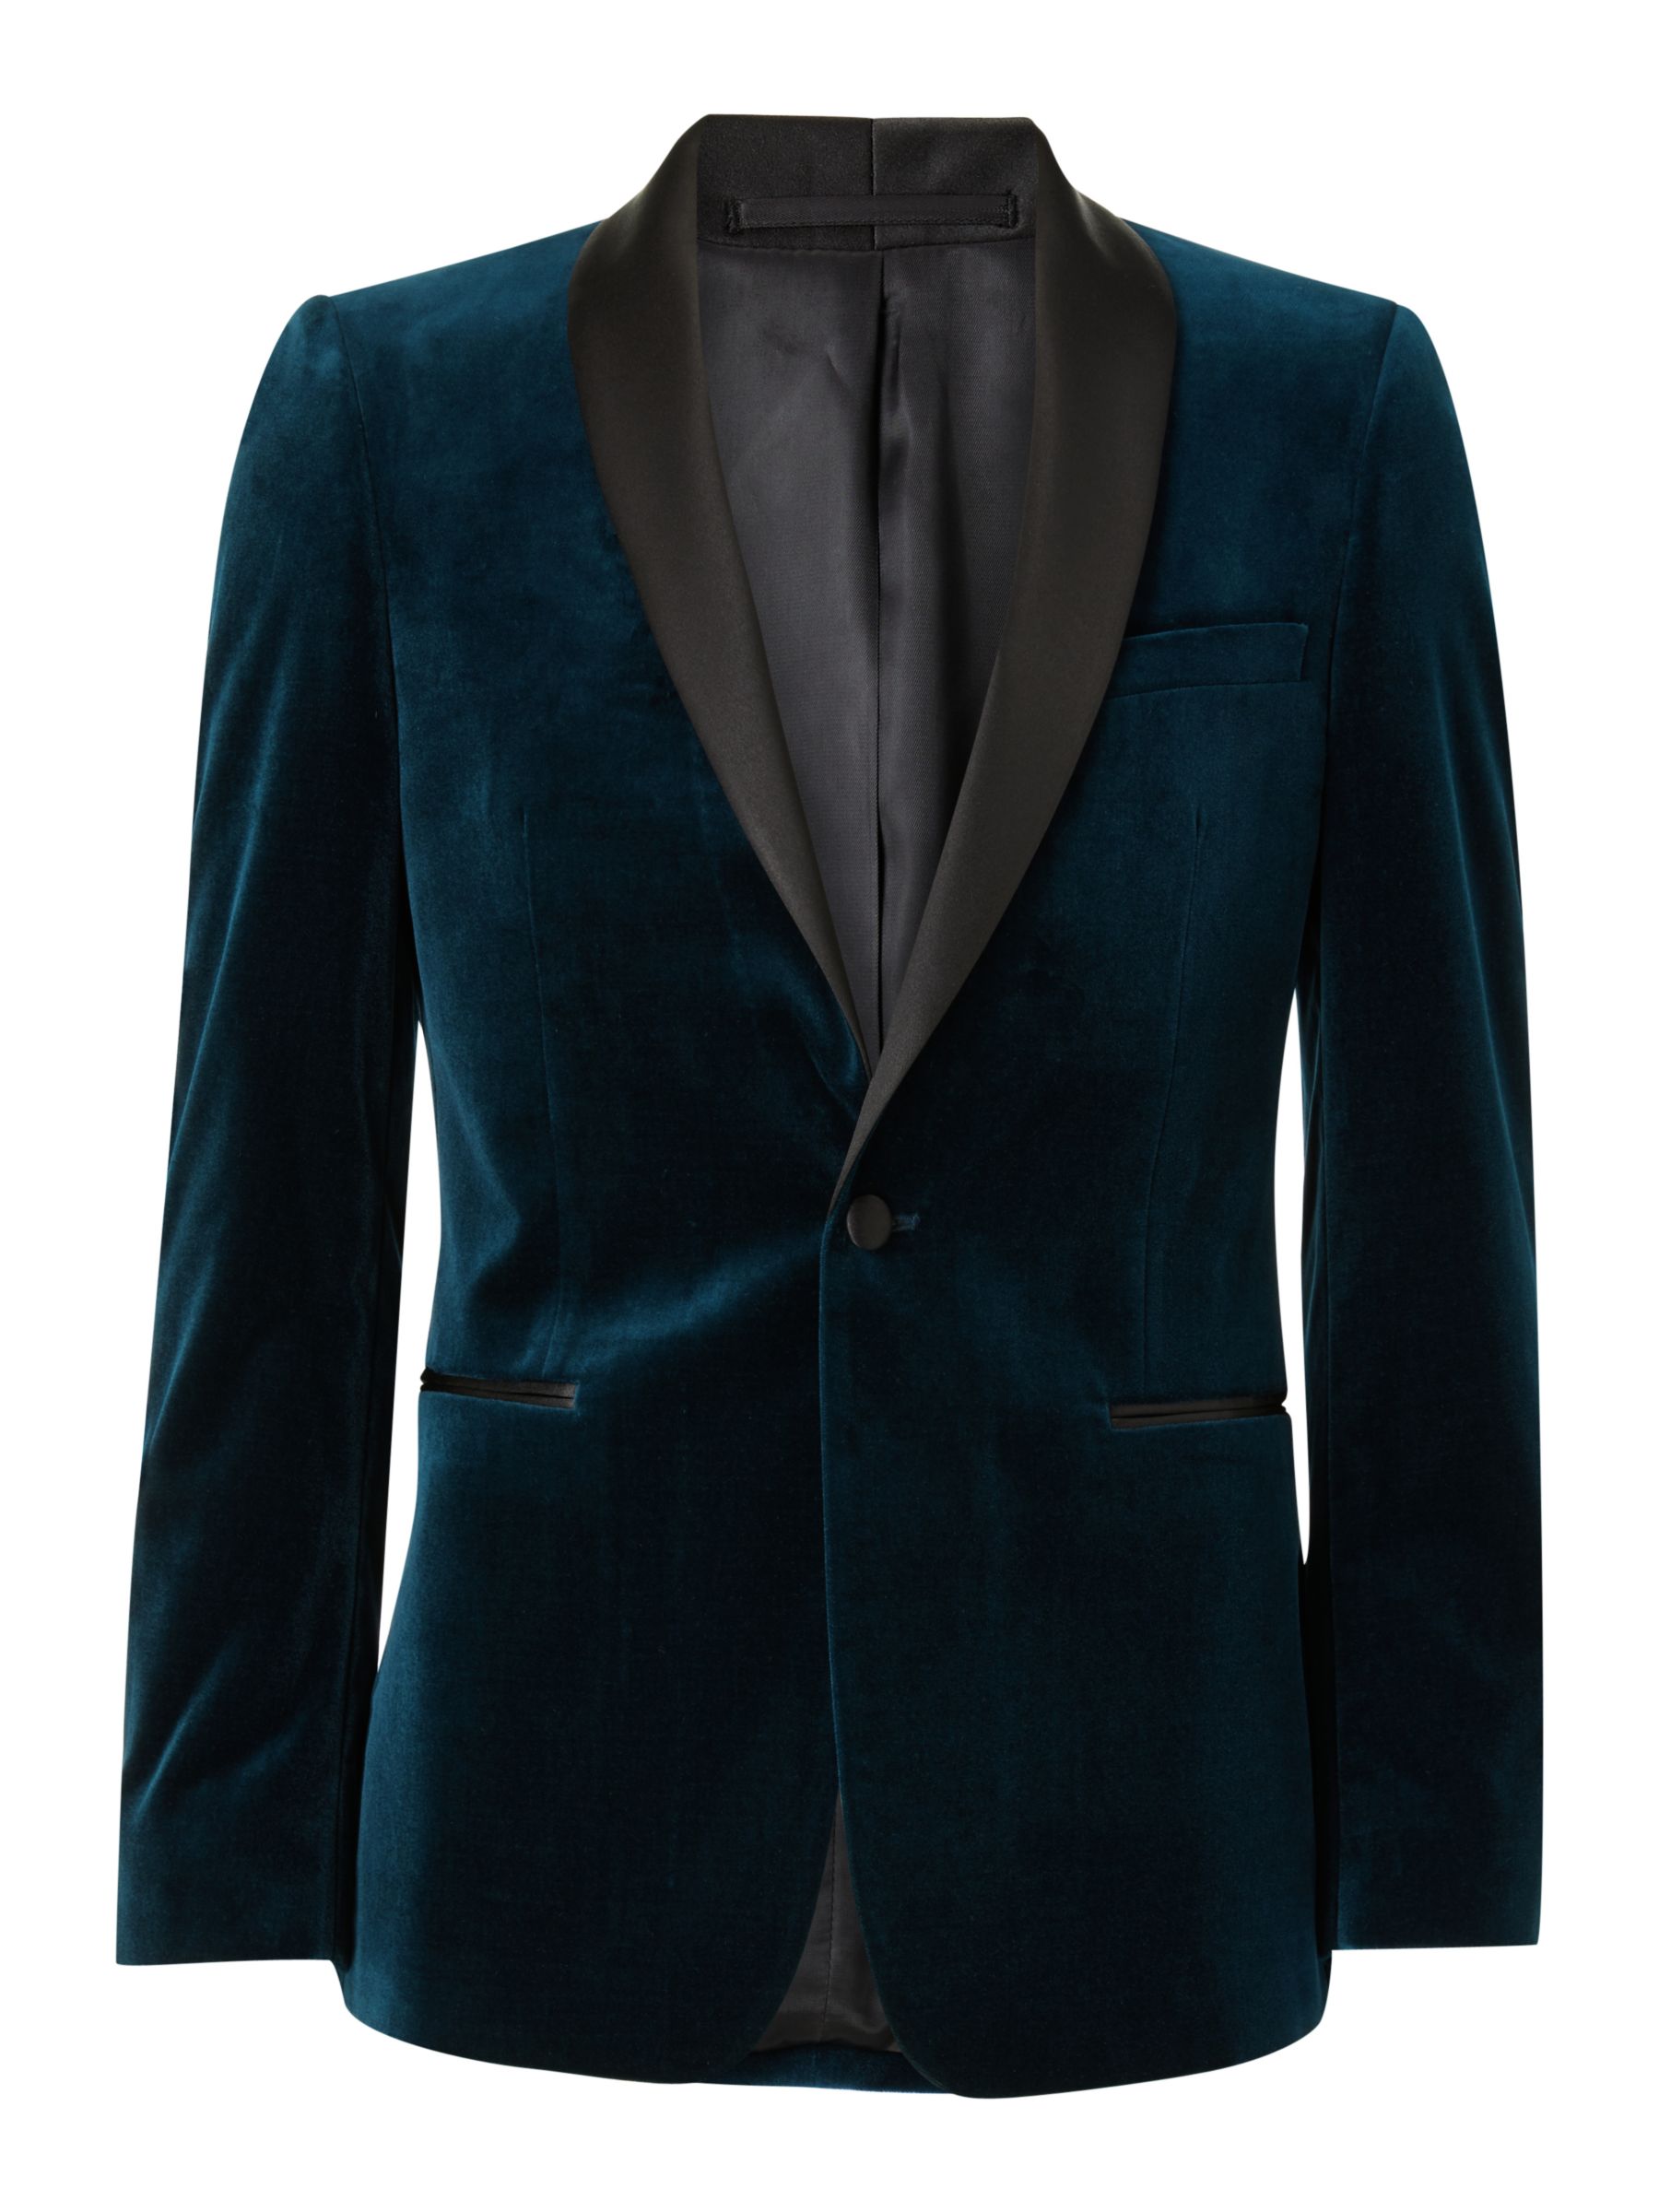 John Lewis & Partners Italian Velvet Shawl Lapel Slim Fit Dress Suit ...